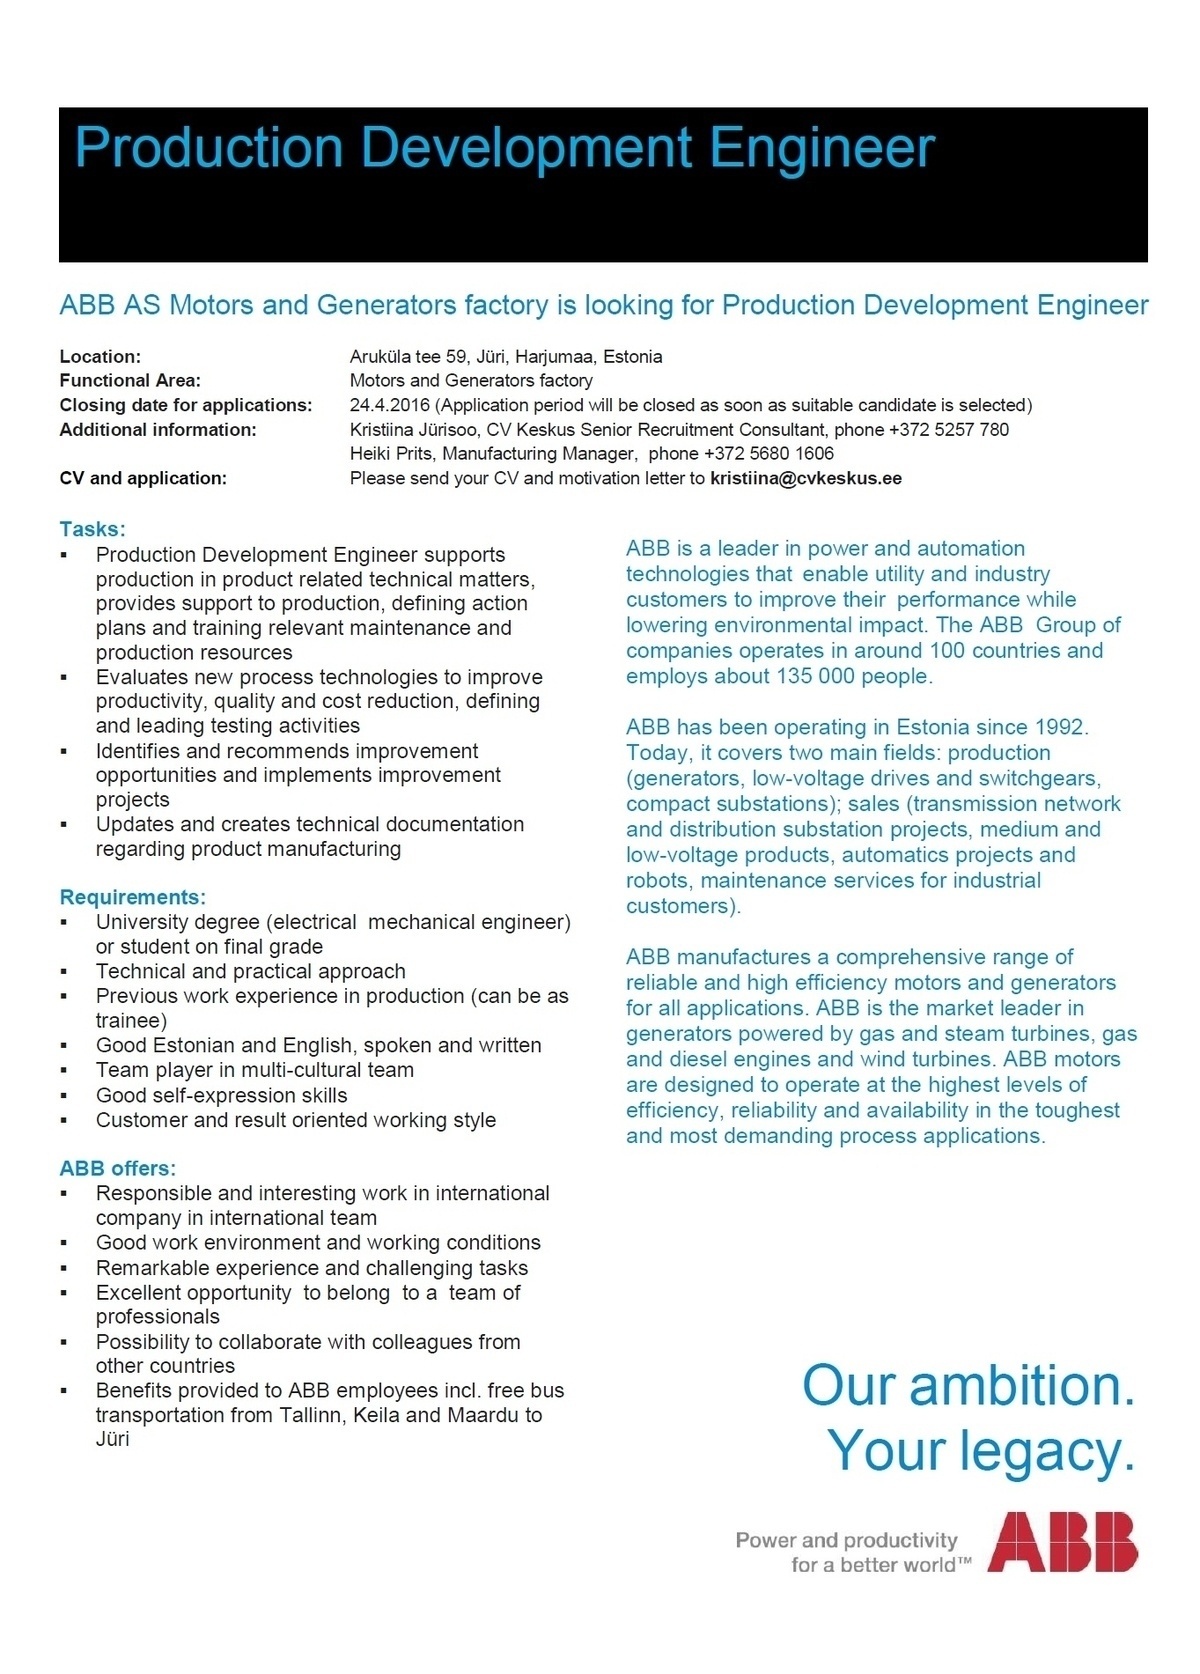 CV KESKUS OÜ ABB is looking for Production Development Engineer